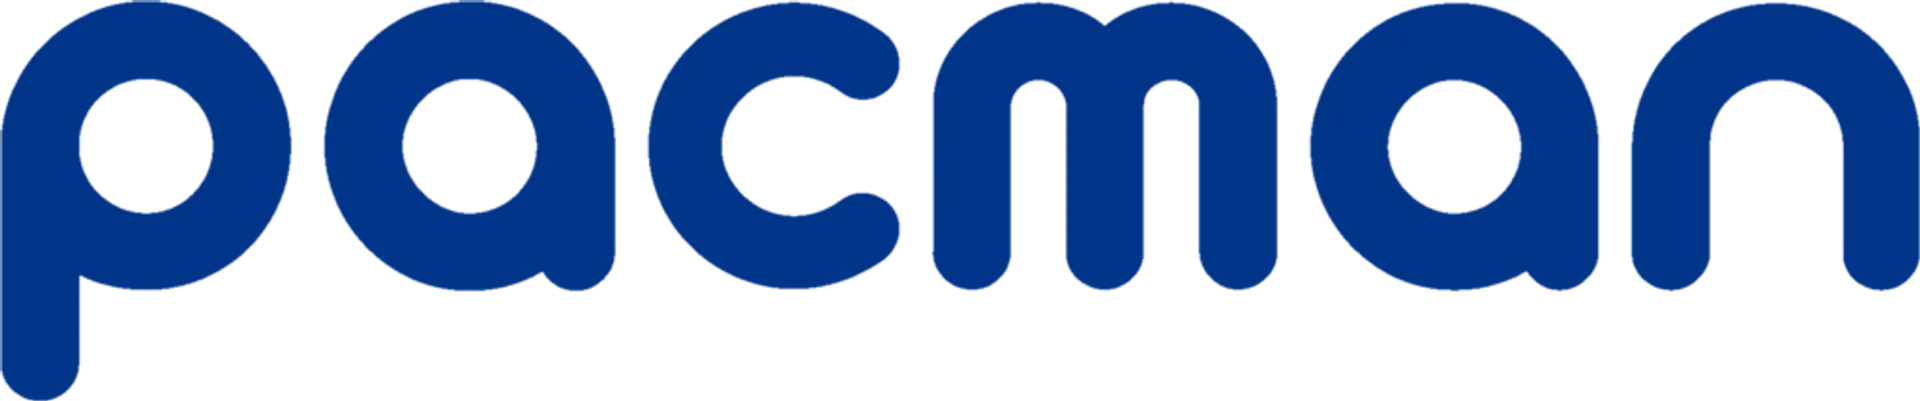 PACMAN logo